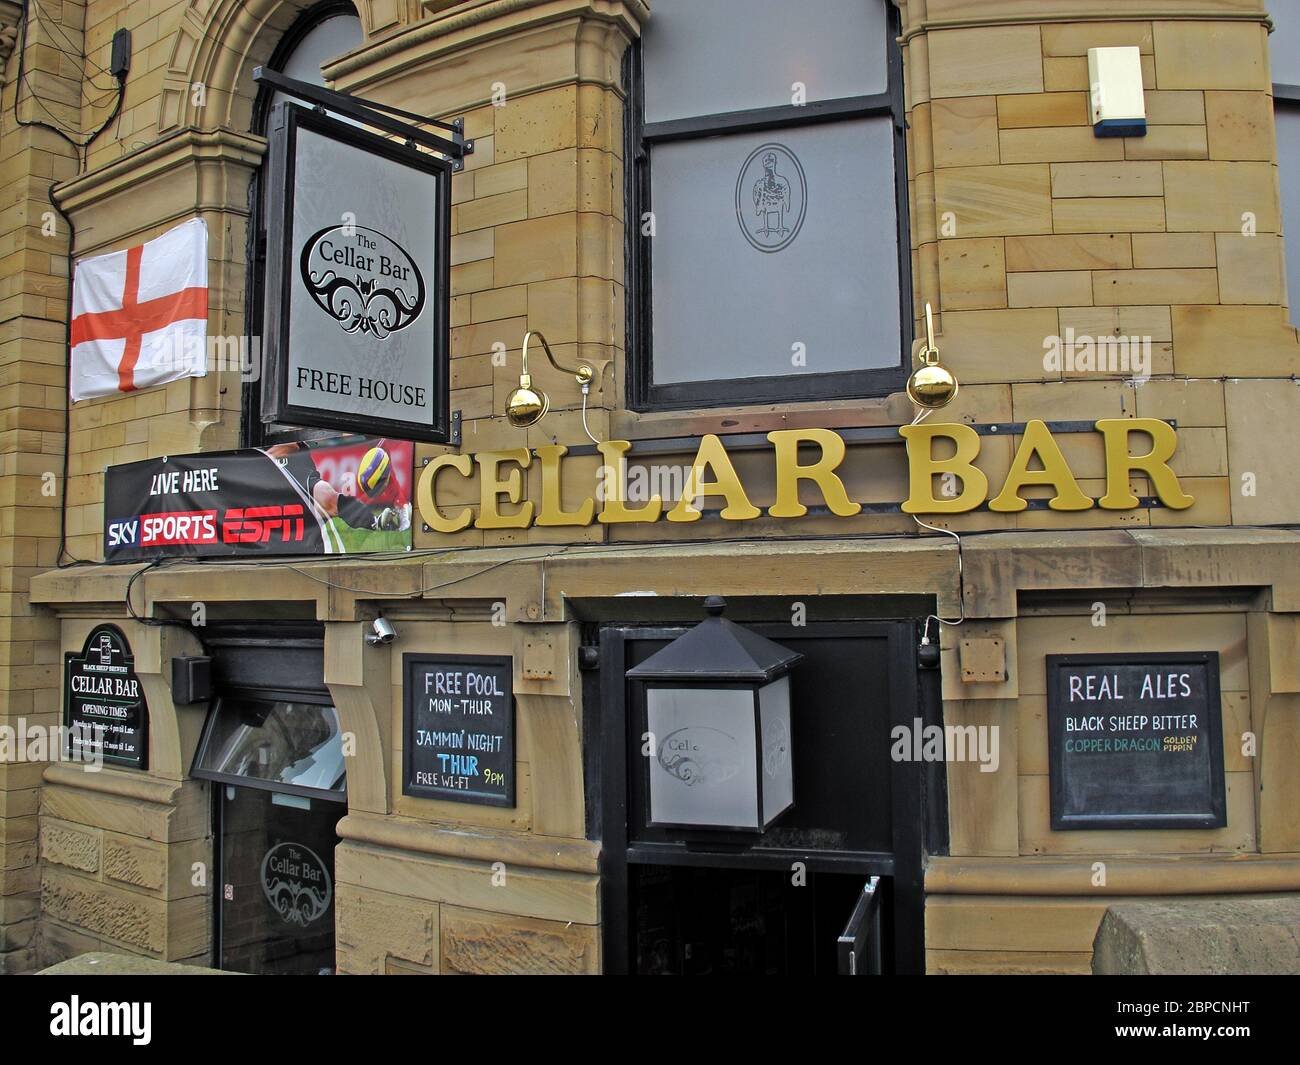 Le bar Cellar, Station Road, Batley, West Yorkshire, Angleterre, Royaume-Uni, sur la piste Transpennine Real Ale Banque D'Images